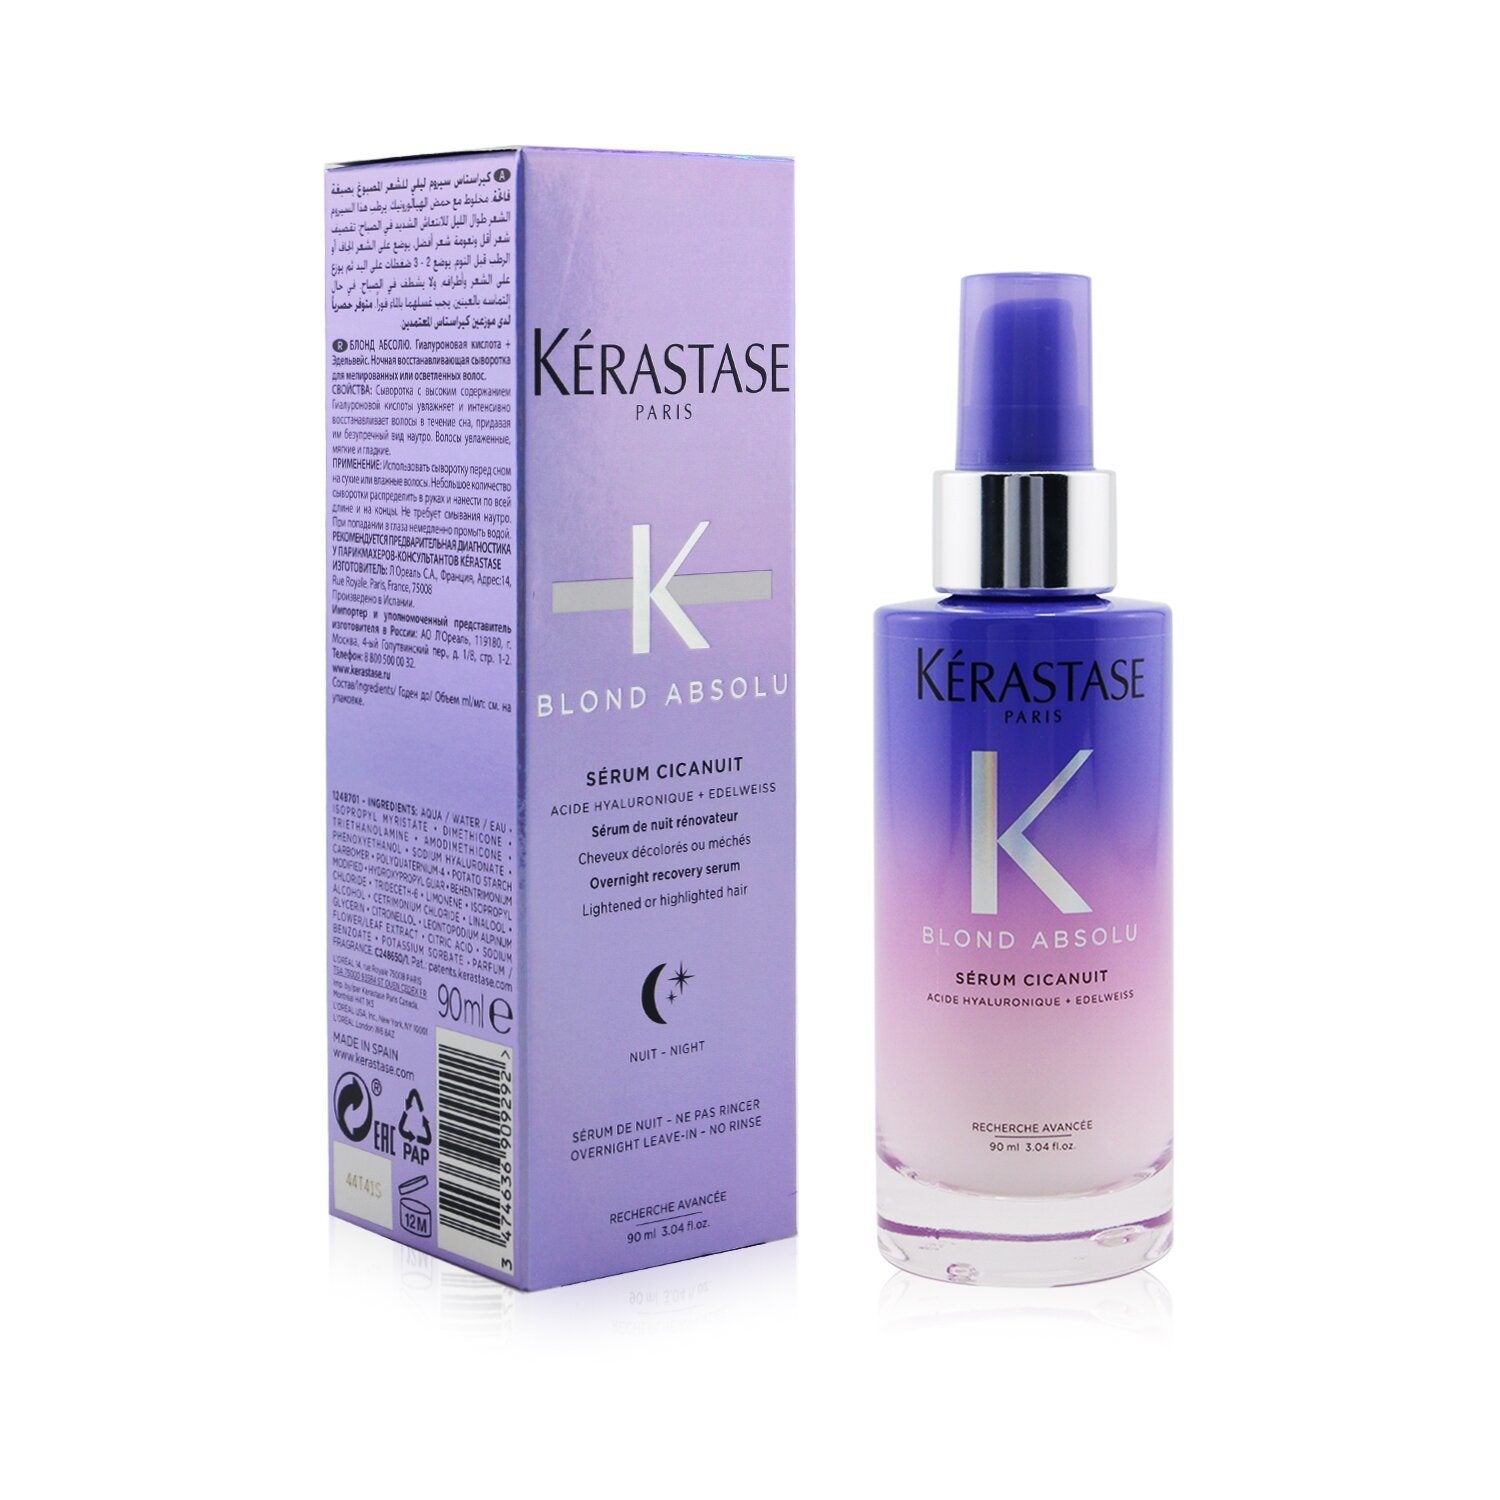 KERASTASE - Blond Absolu Serum Cicanuit Overnight Recovery Serum (Lightened or Highlighted Hair) - 90ml/1.04oz 3P's Inclusive Beauty